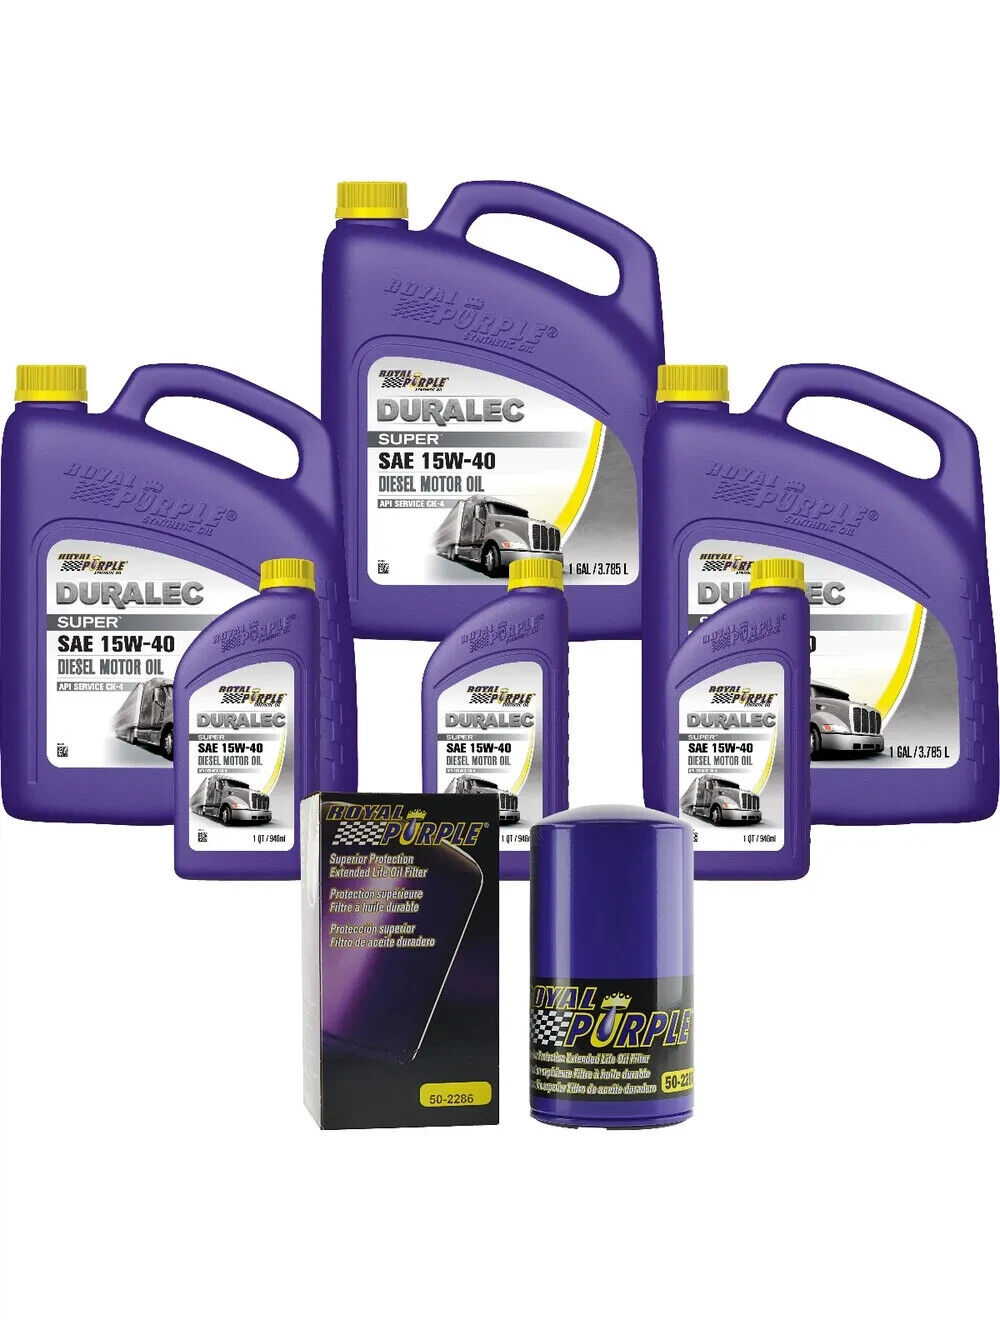 Royal Purple  15W-40 CK/4 Diesel Oil 15 quarts and Royal Purple 50-2286 Oil Filt